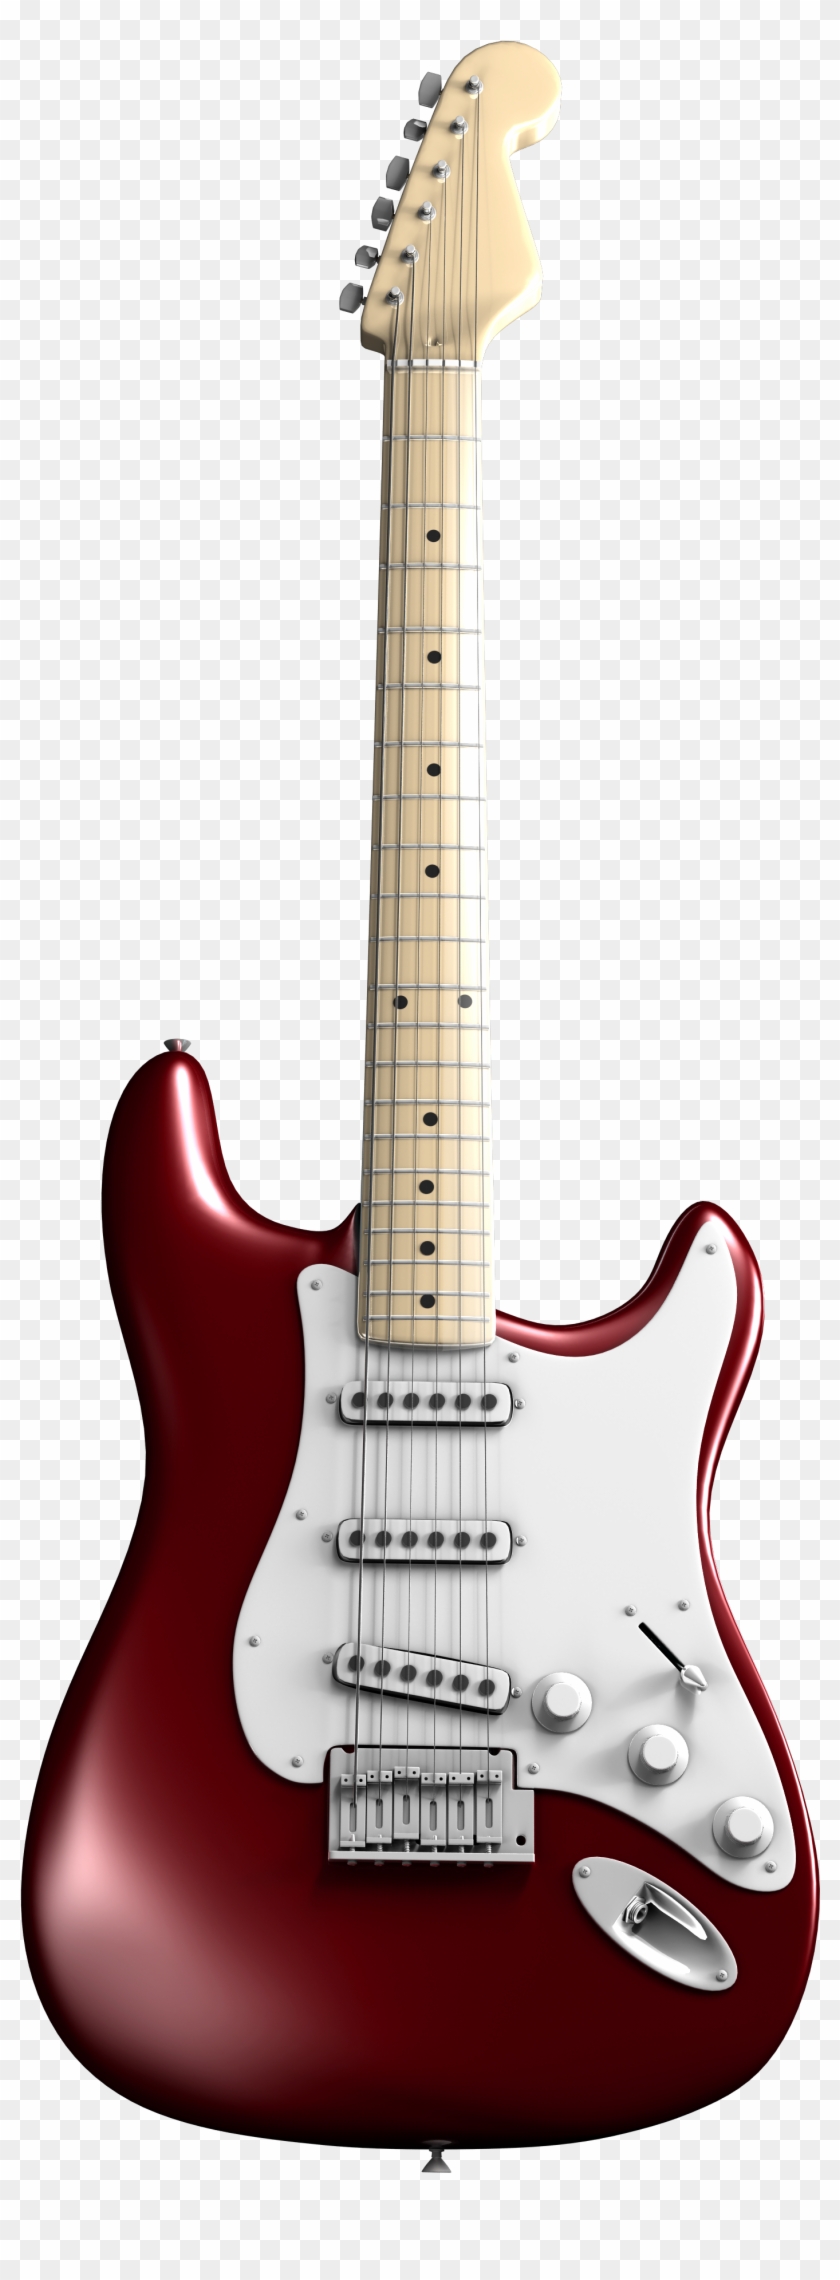 Electric Guitar Png Image - Electric Guitar #1332962